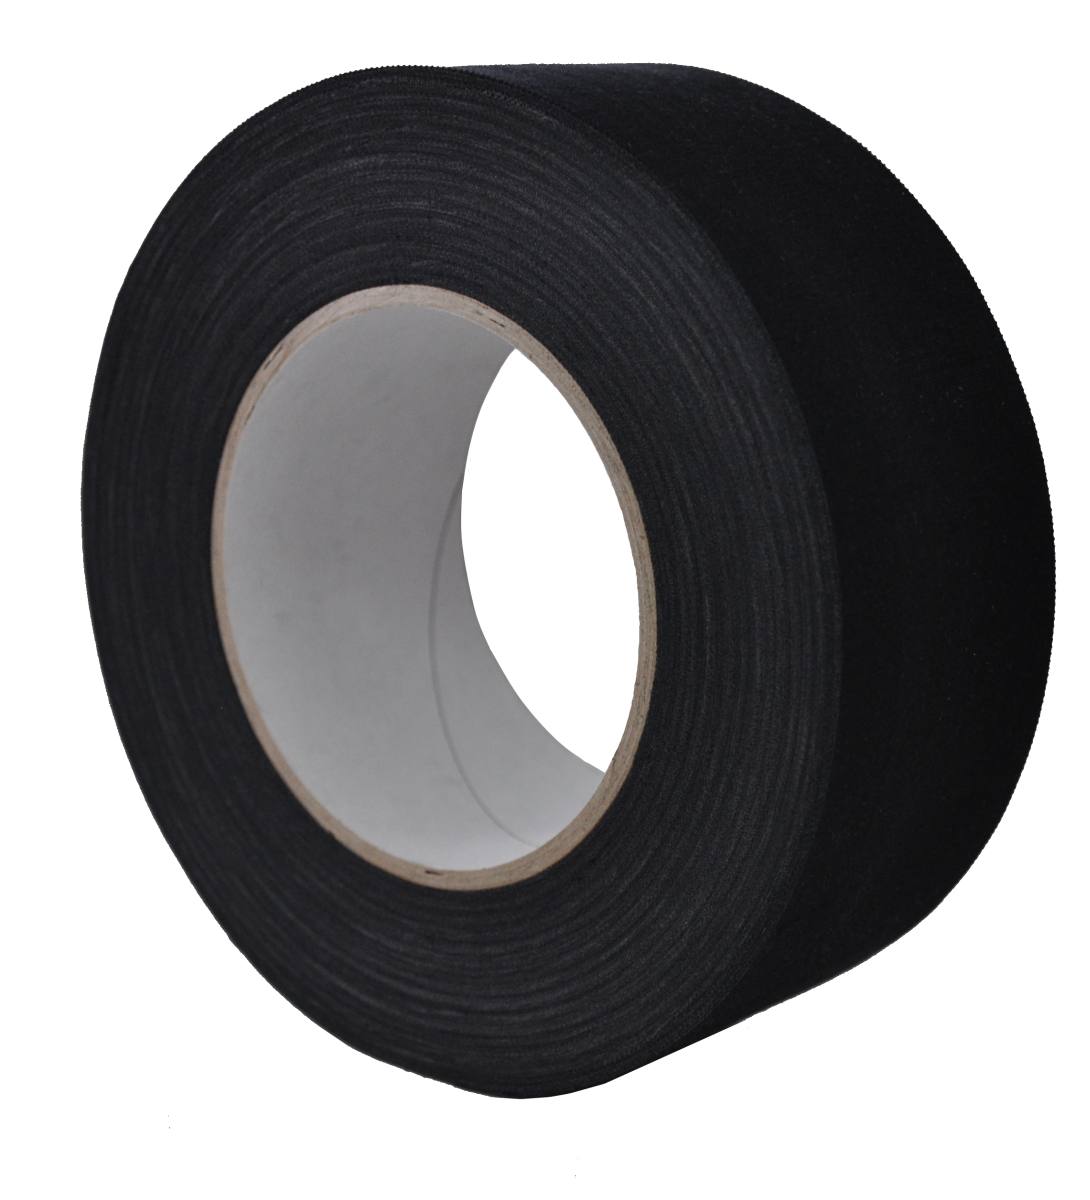 S-K-S 970 Raw fabric adhesive tape, 19 mm x 50 m, black, 0.240 mm